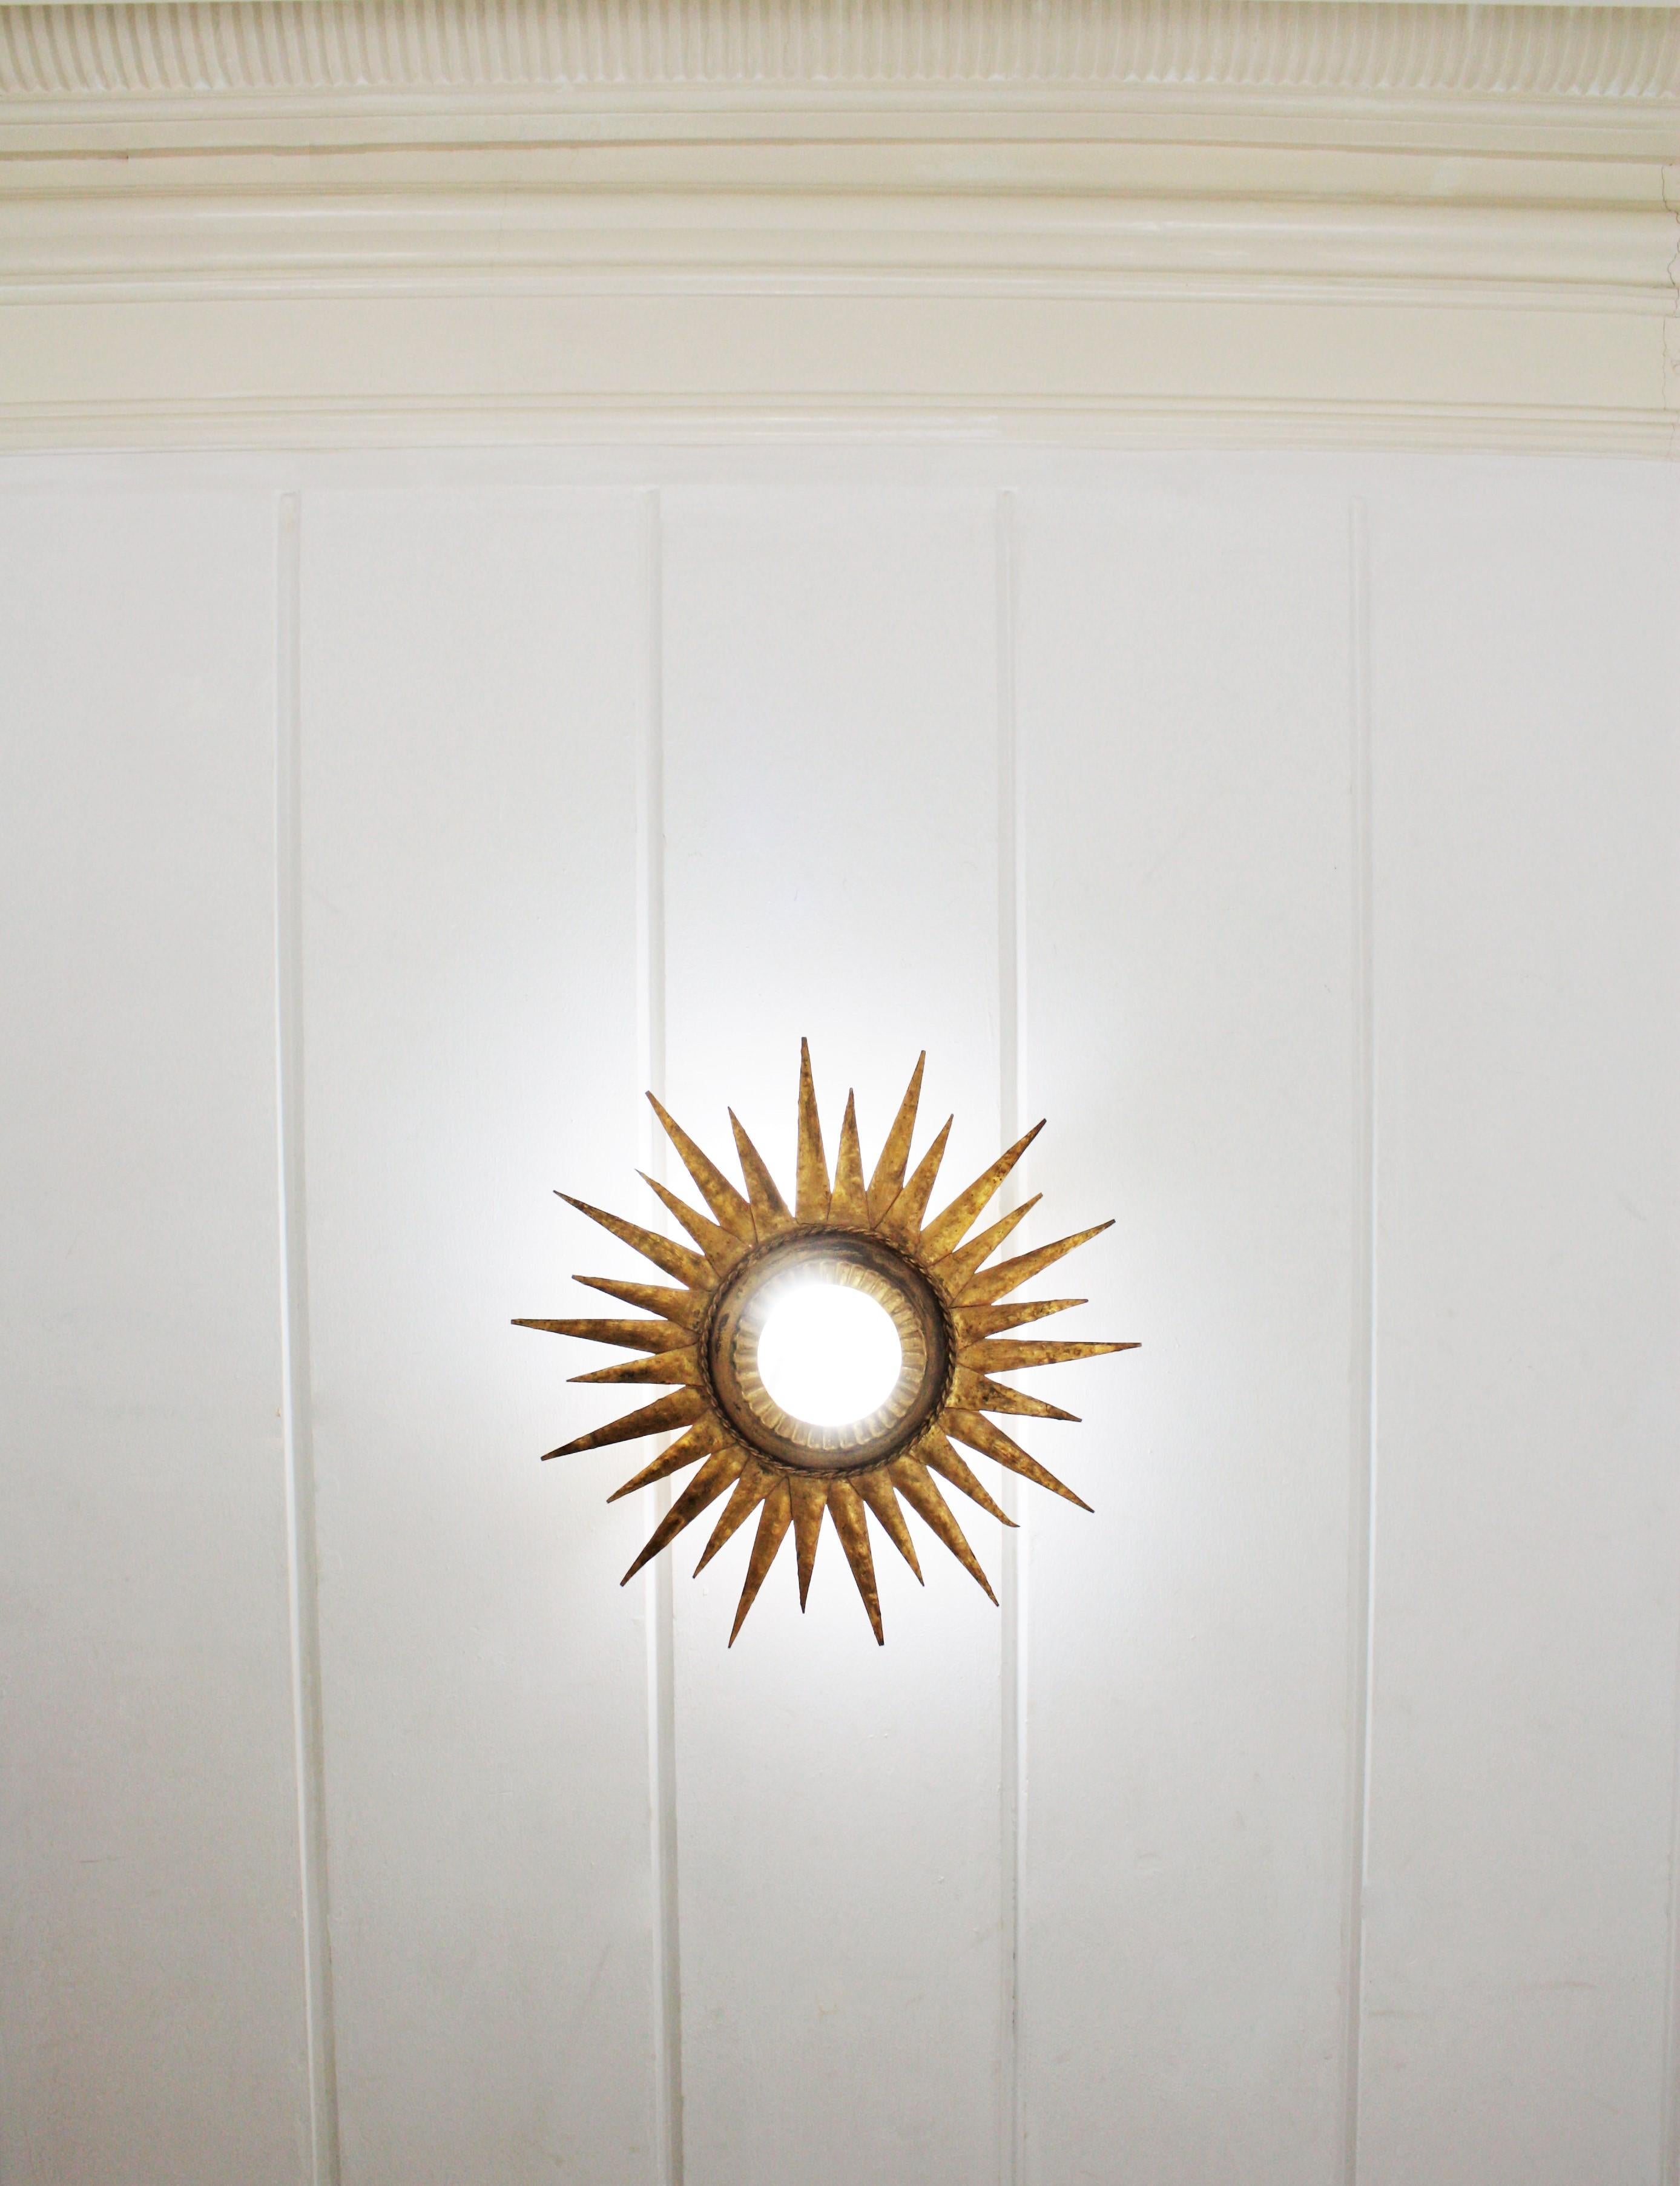 Sunburst Ceiling Light Fixture or Wall Sconce / Sunburst Mirror,  Gilt Iron 4